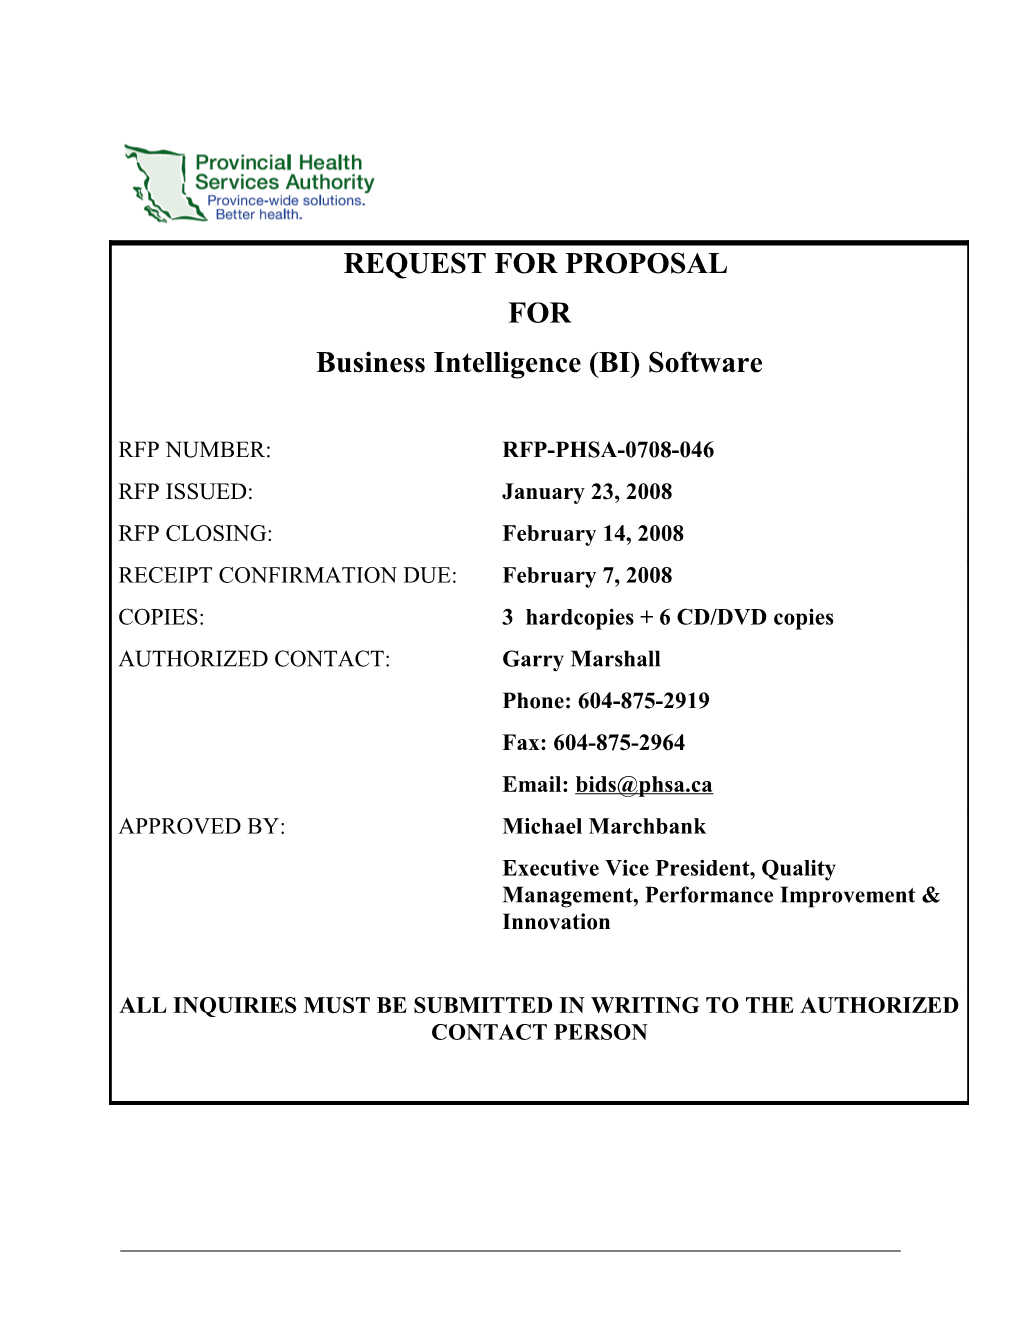 Business Intelligence (BI) Software RFP-PHSA-0708-046 Close Date: February 14, 2008